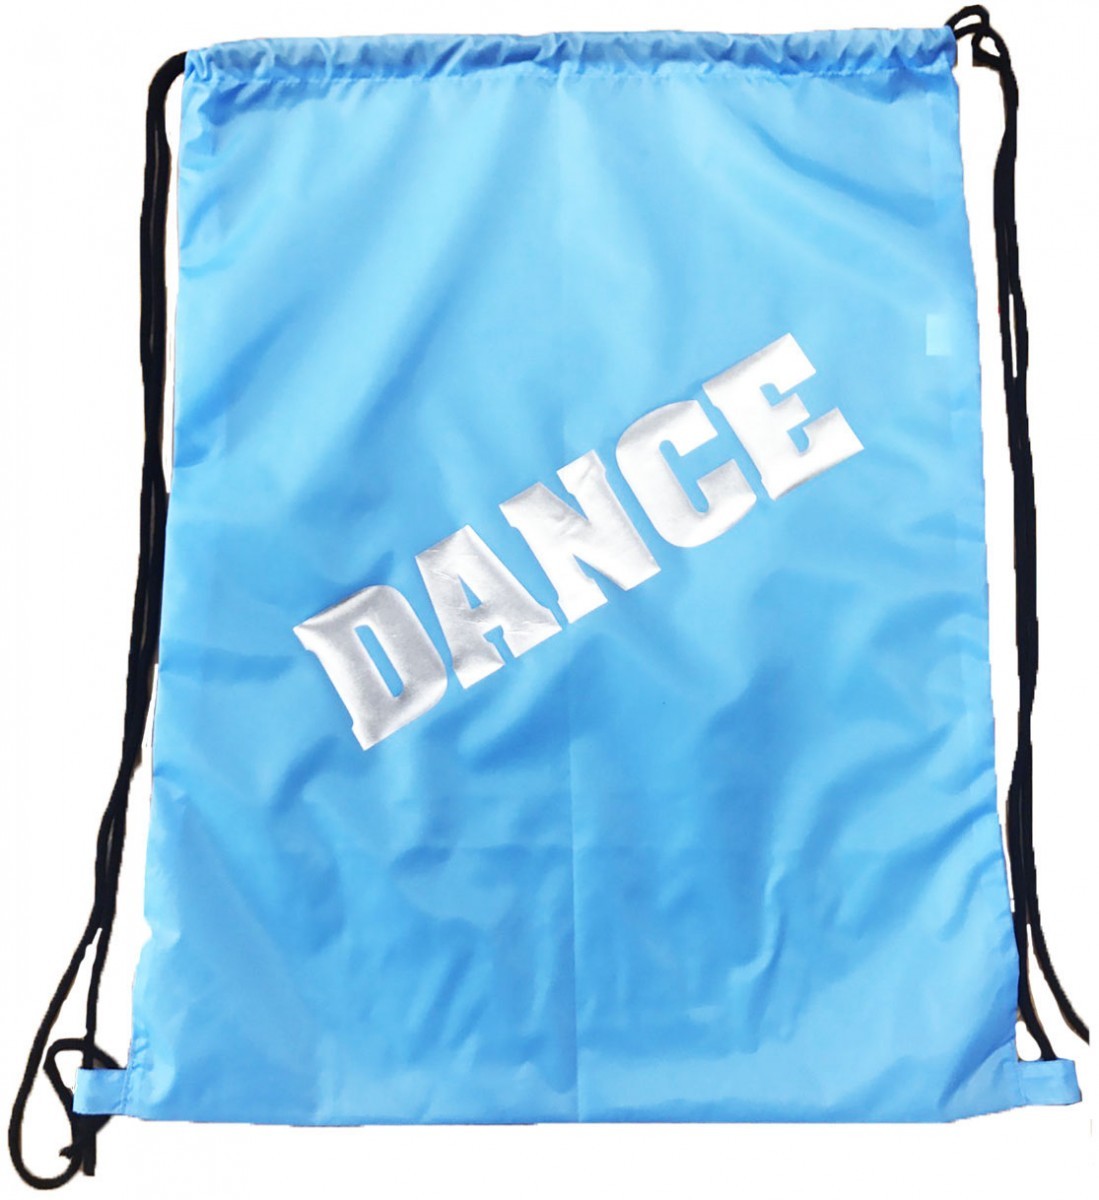 DANCE rucksack type laundry bag blue Cheer goods 